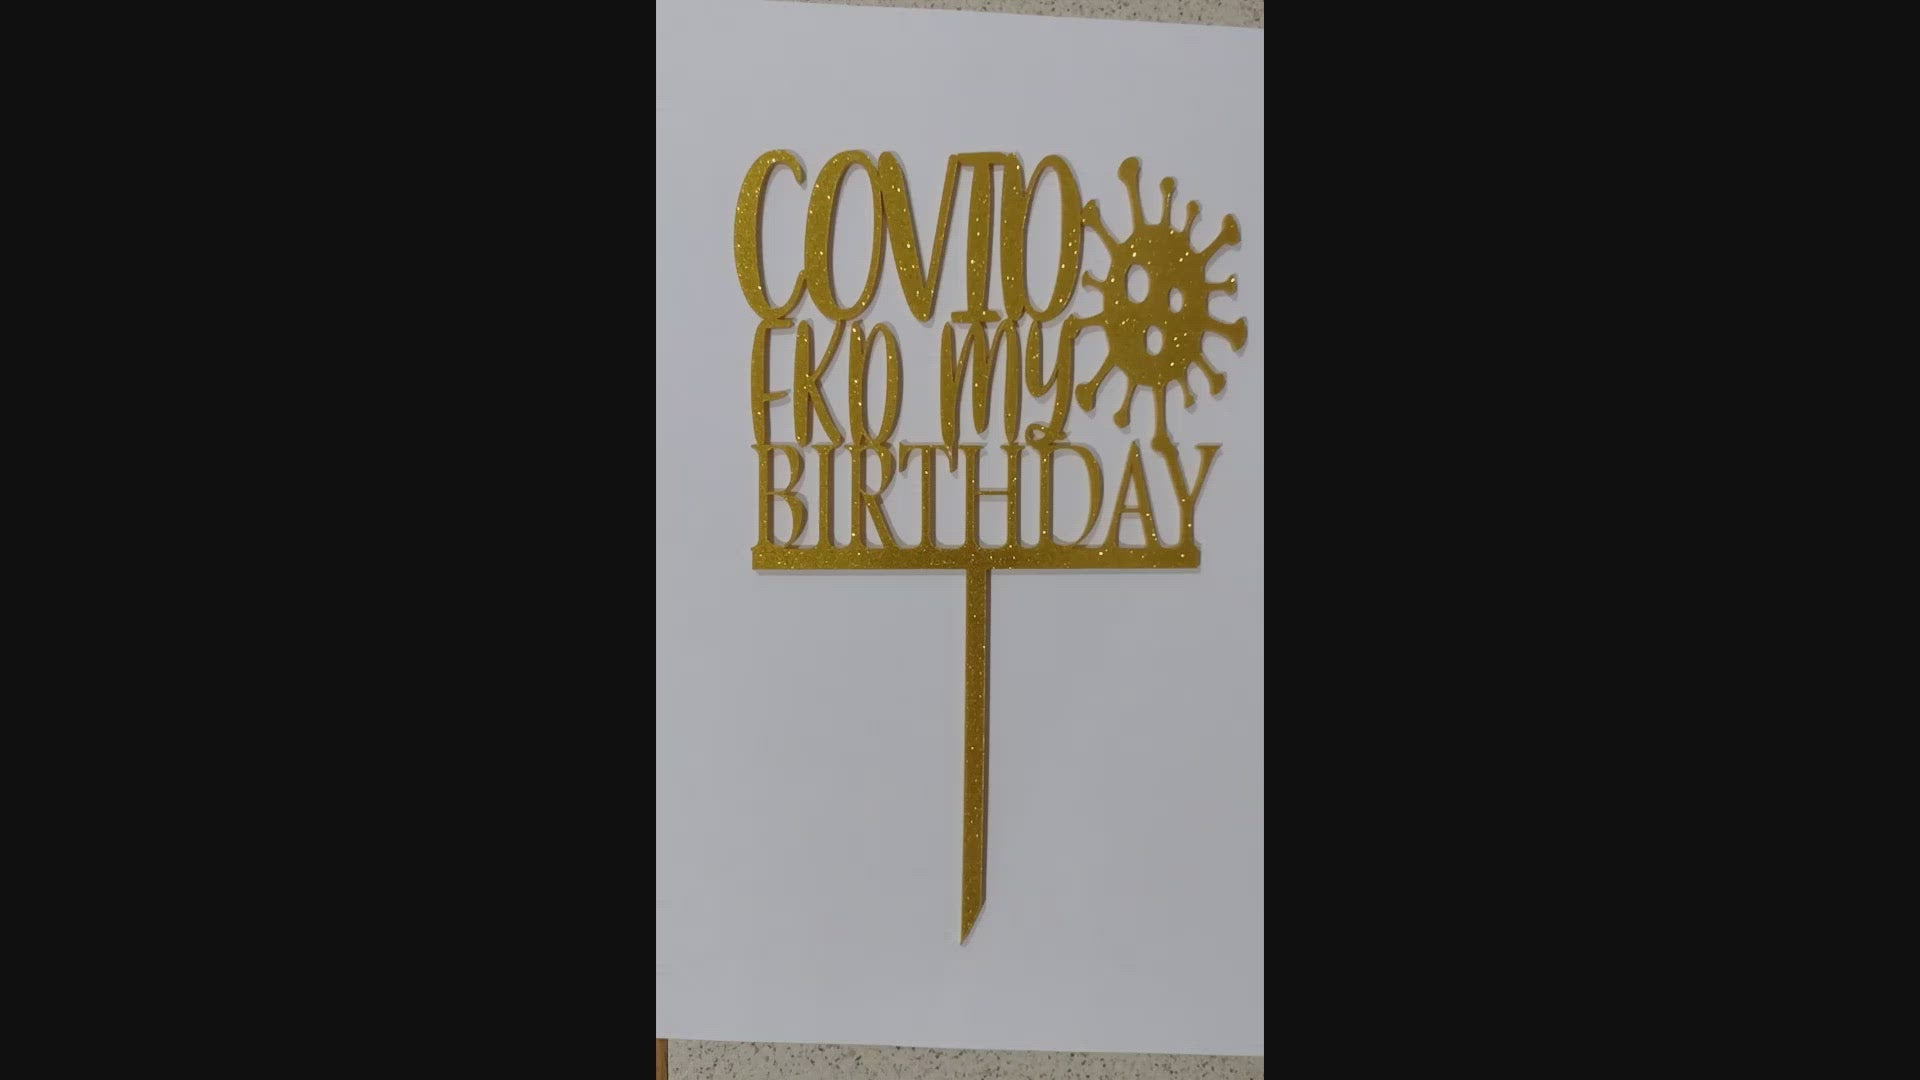 Covid FKD My Birthday  Cake Topper